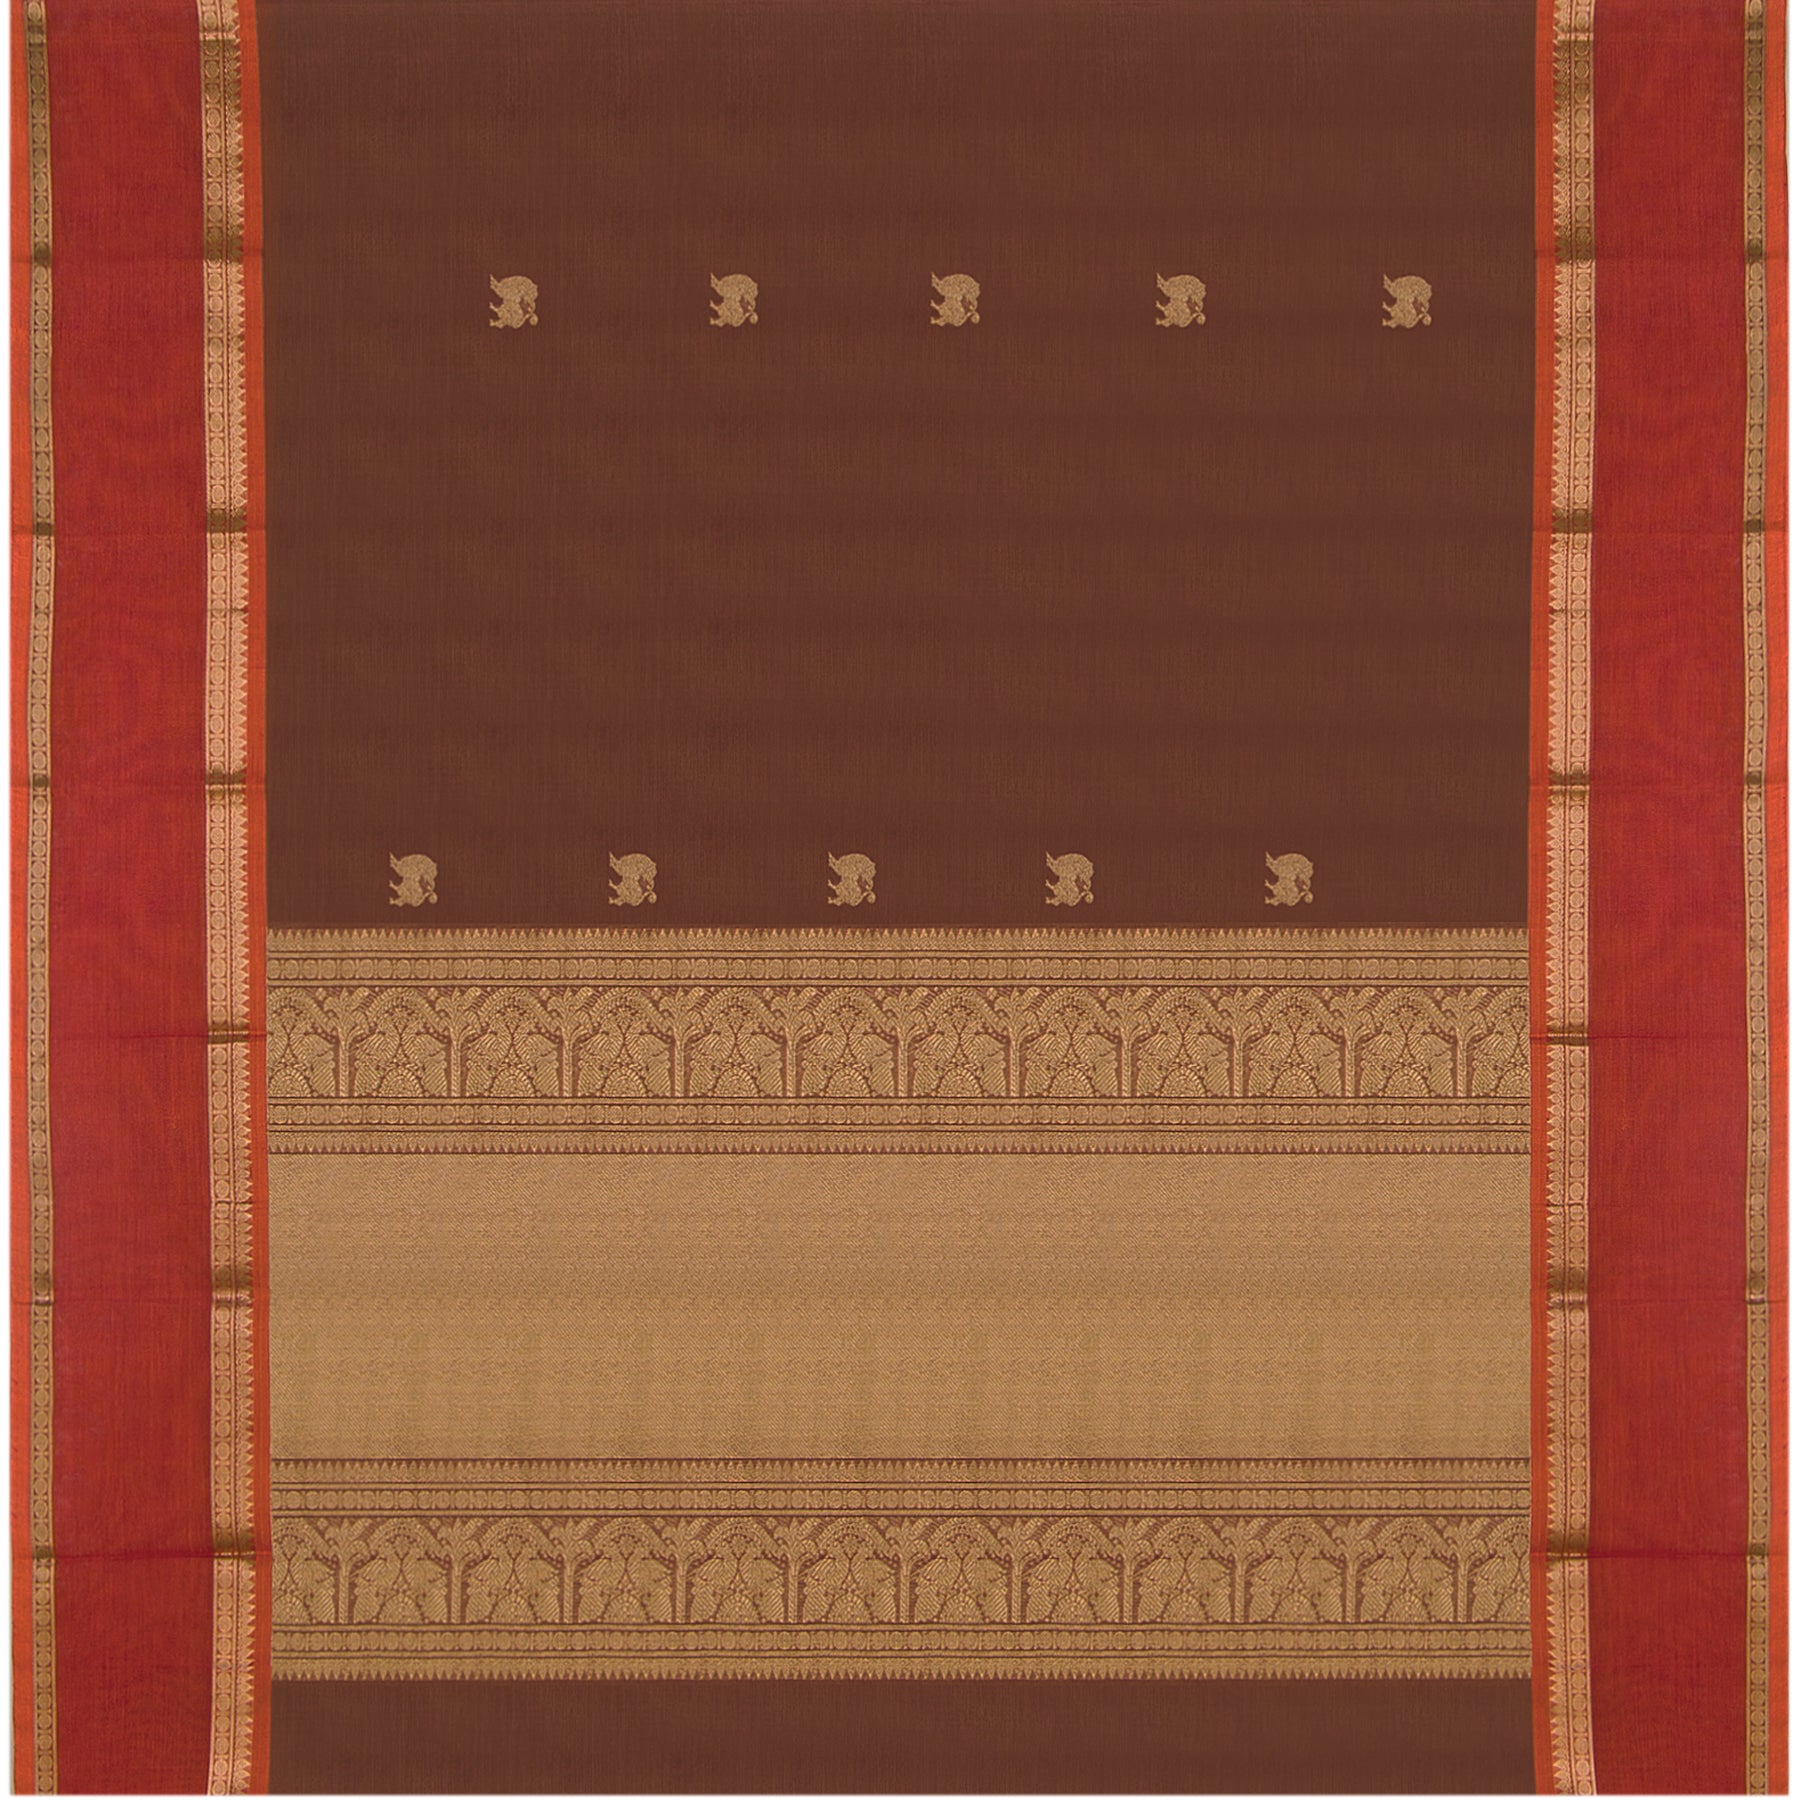 Kanakavalli Kanchi Cotton Sari 23-613-HS003-03401 - Full View